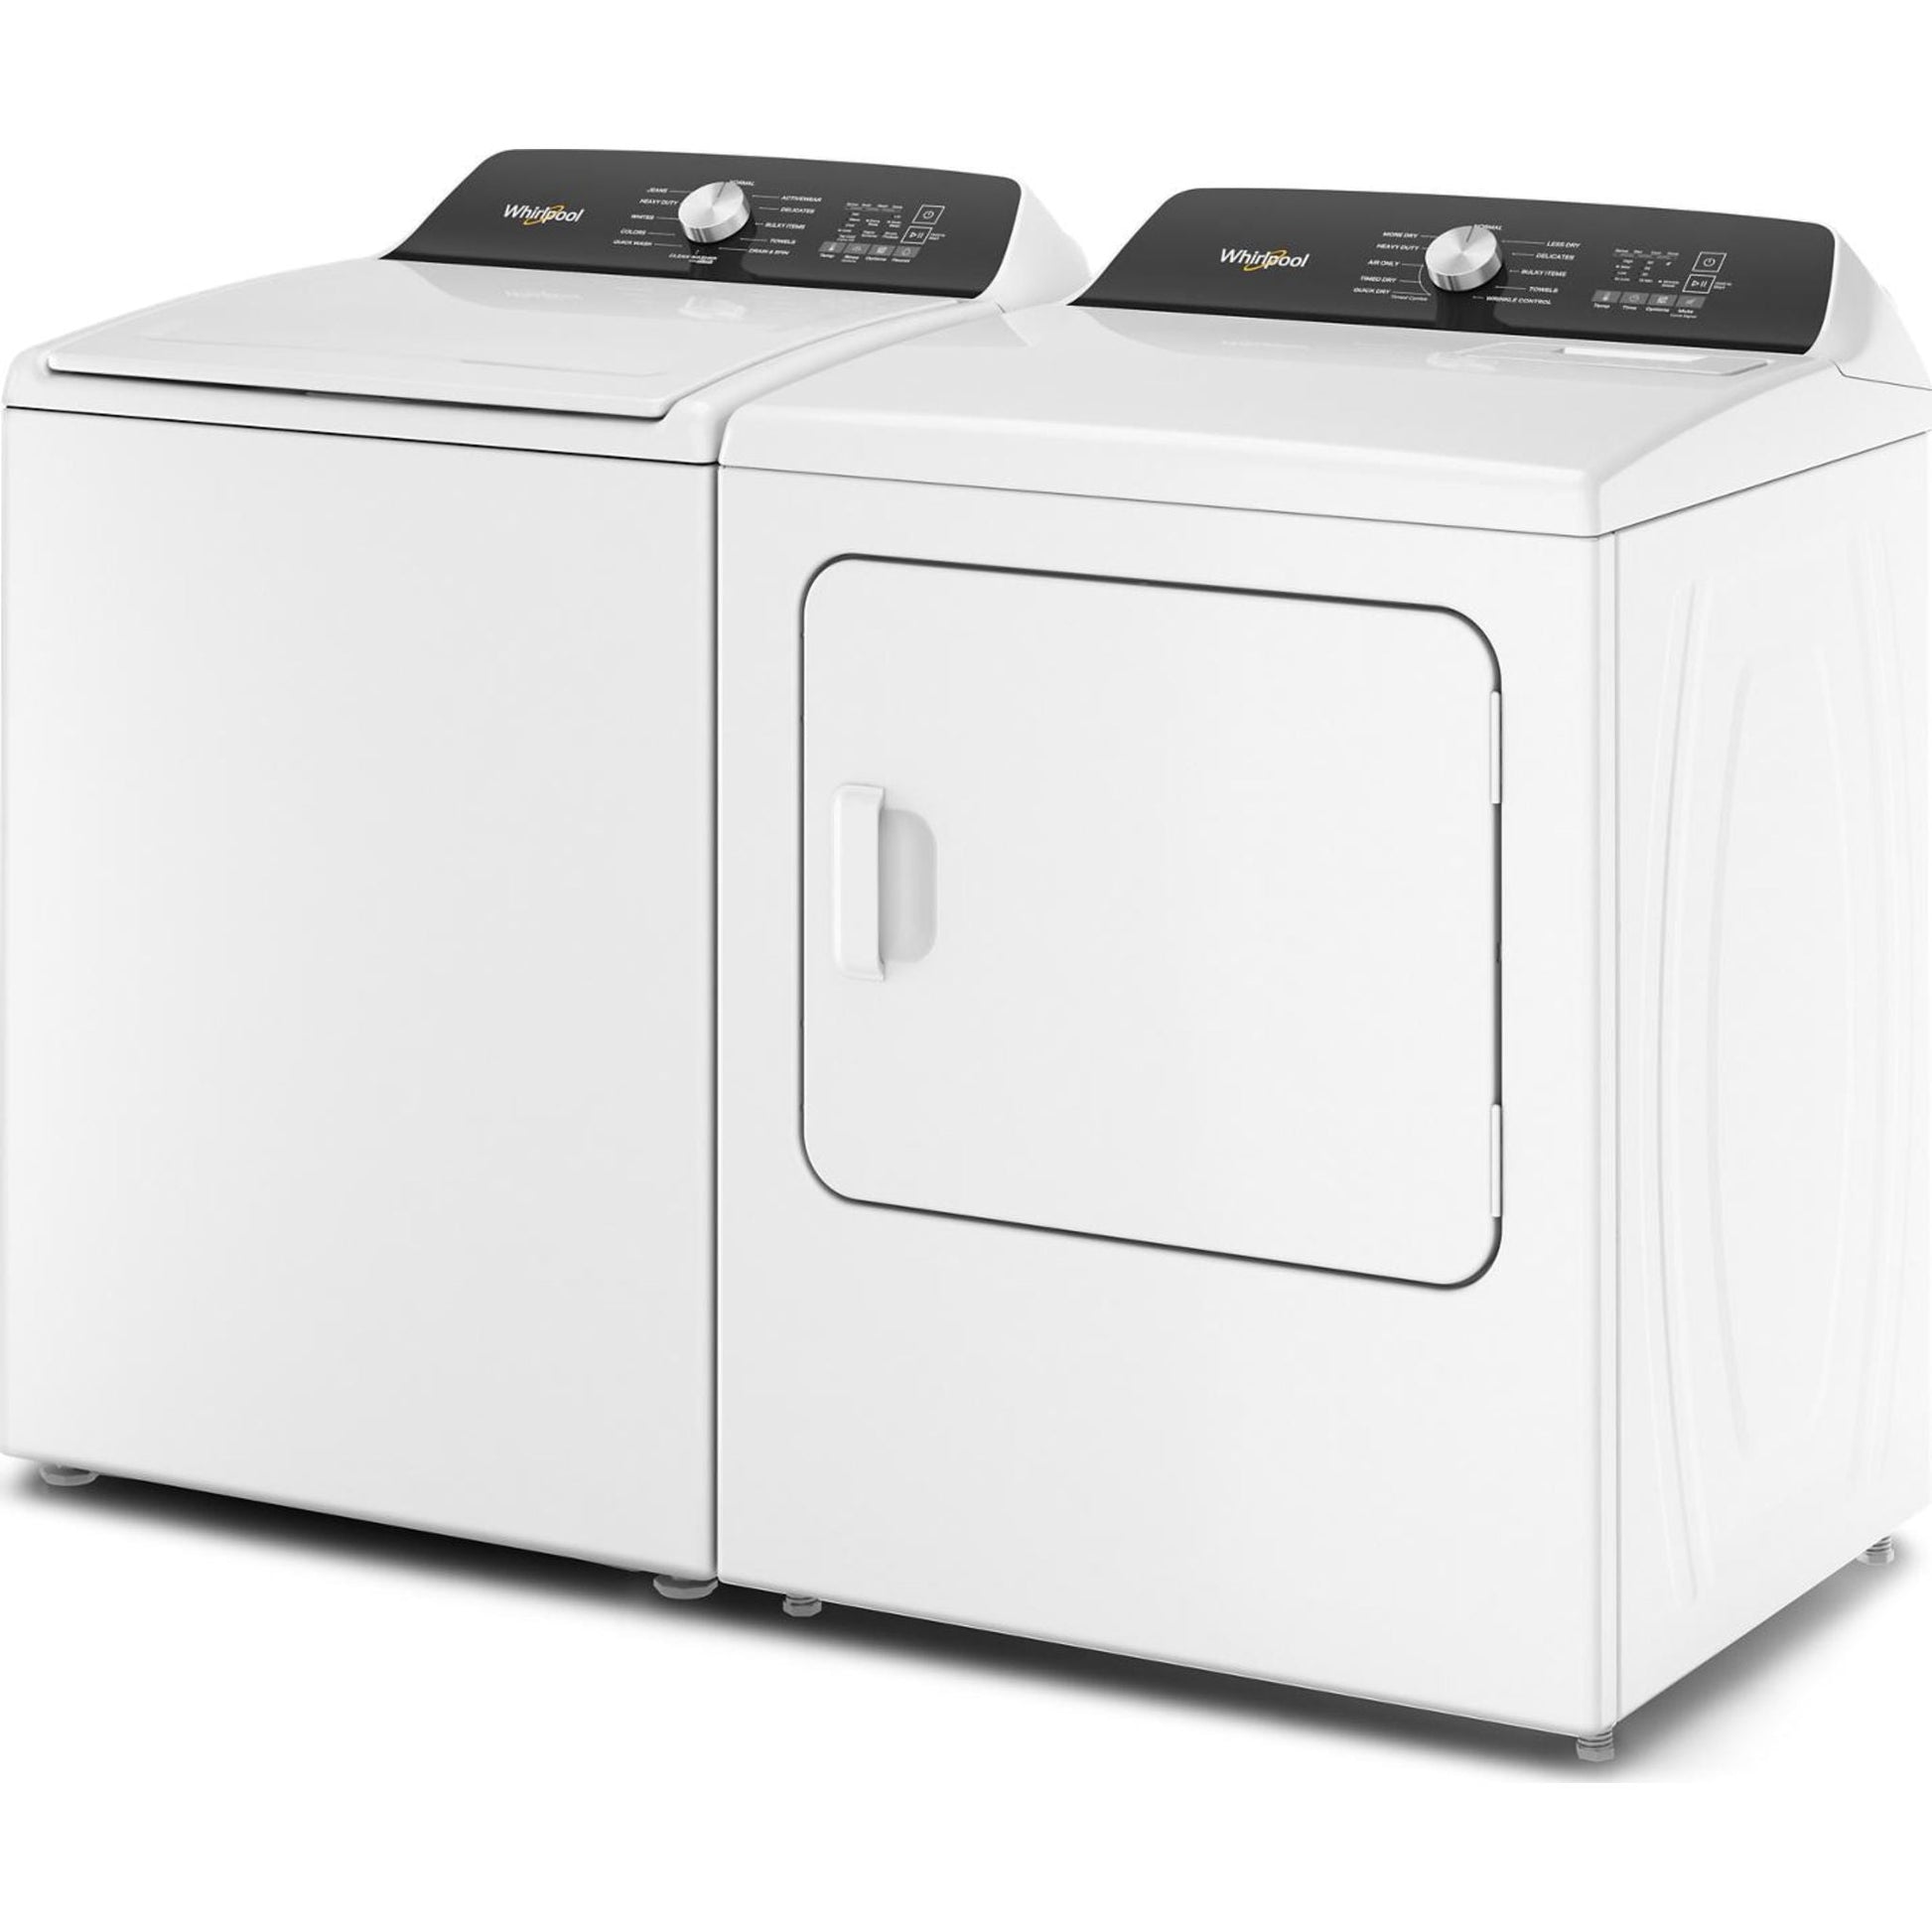 Whirlpool Dryer (YWED5010LW) - WHITE